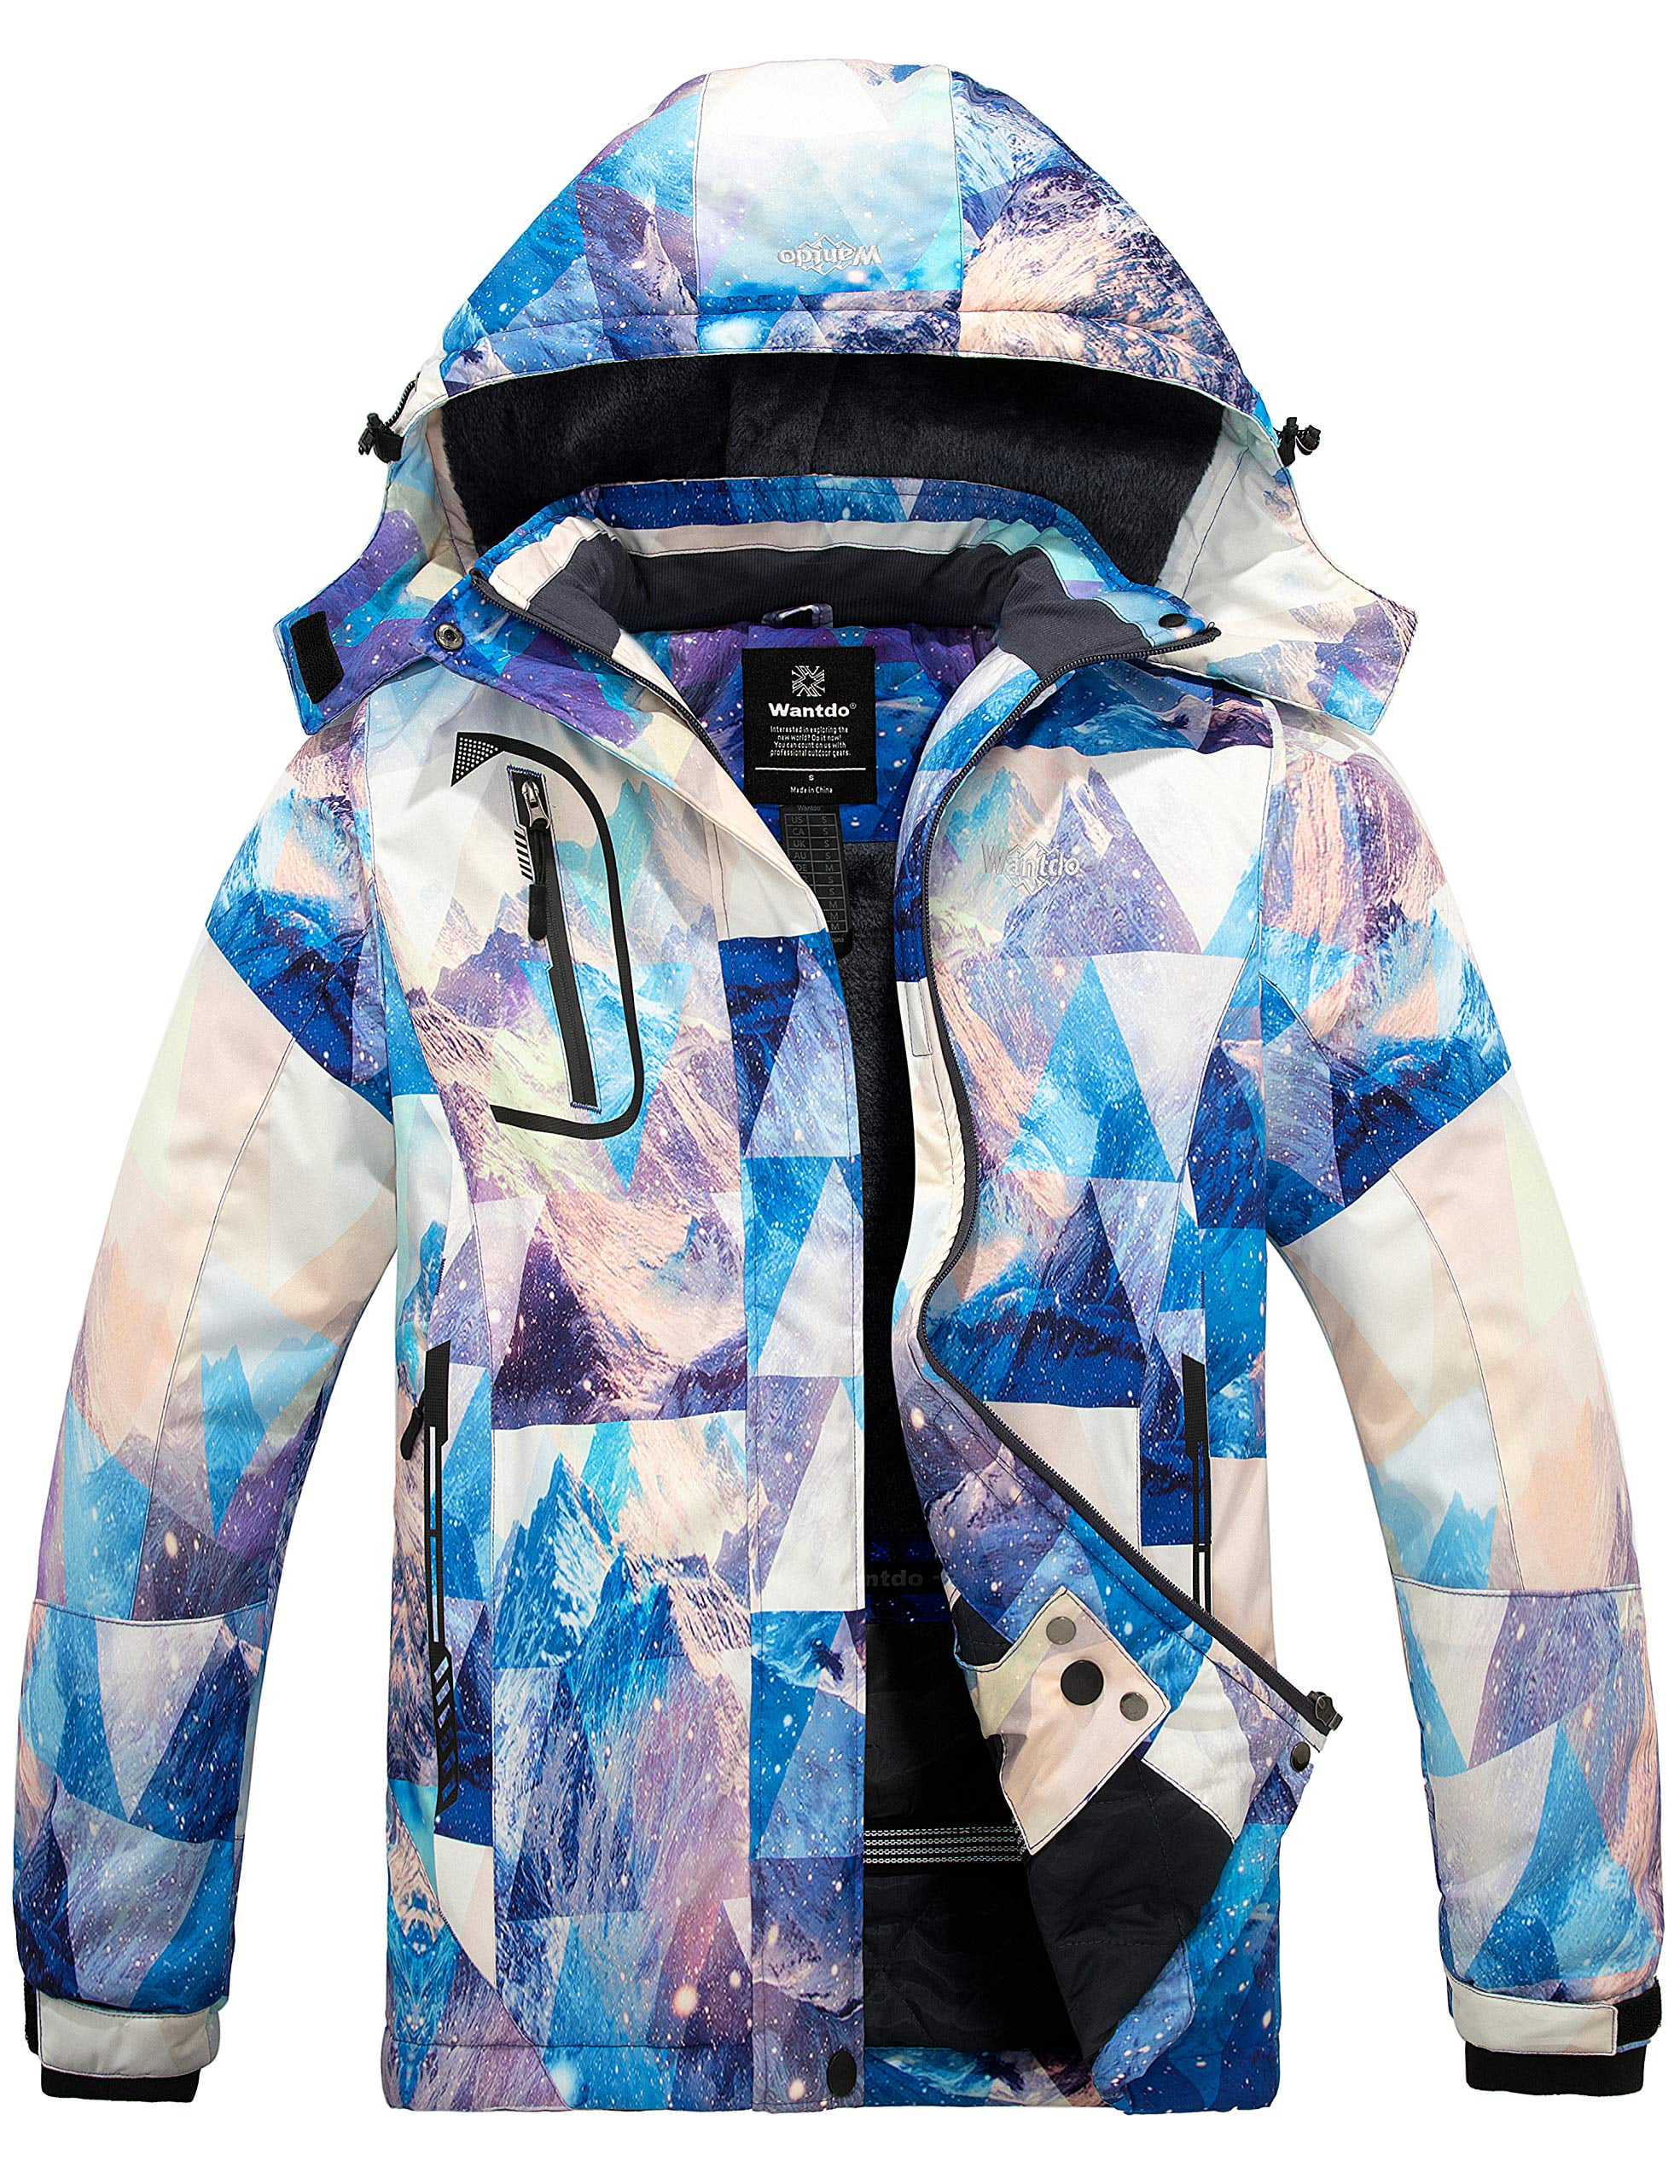 Wantdo Womens Waterproof Ski Jacket Colorful Printed Rain Coat Winter Parka 